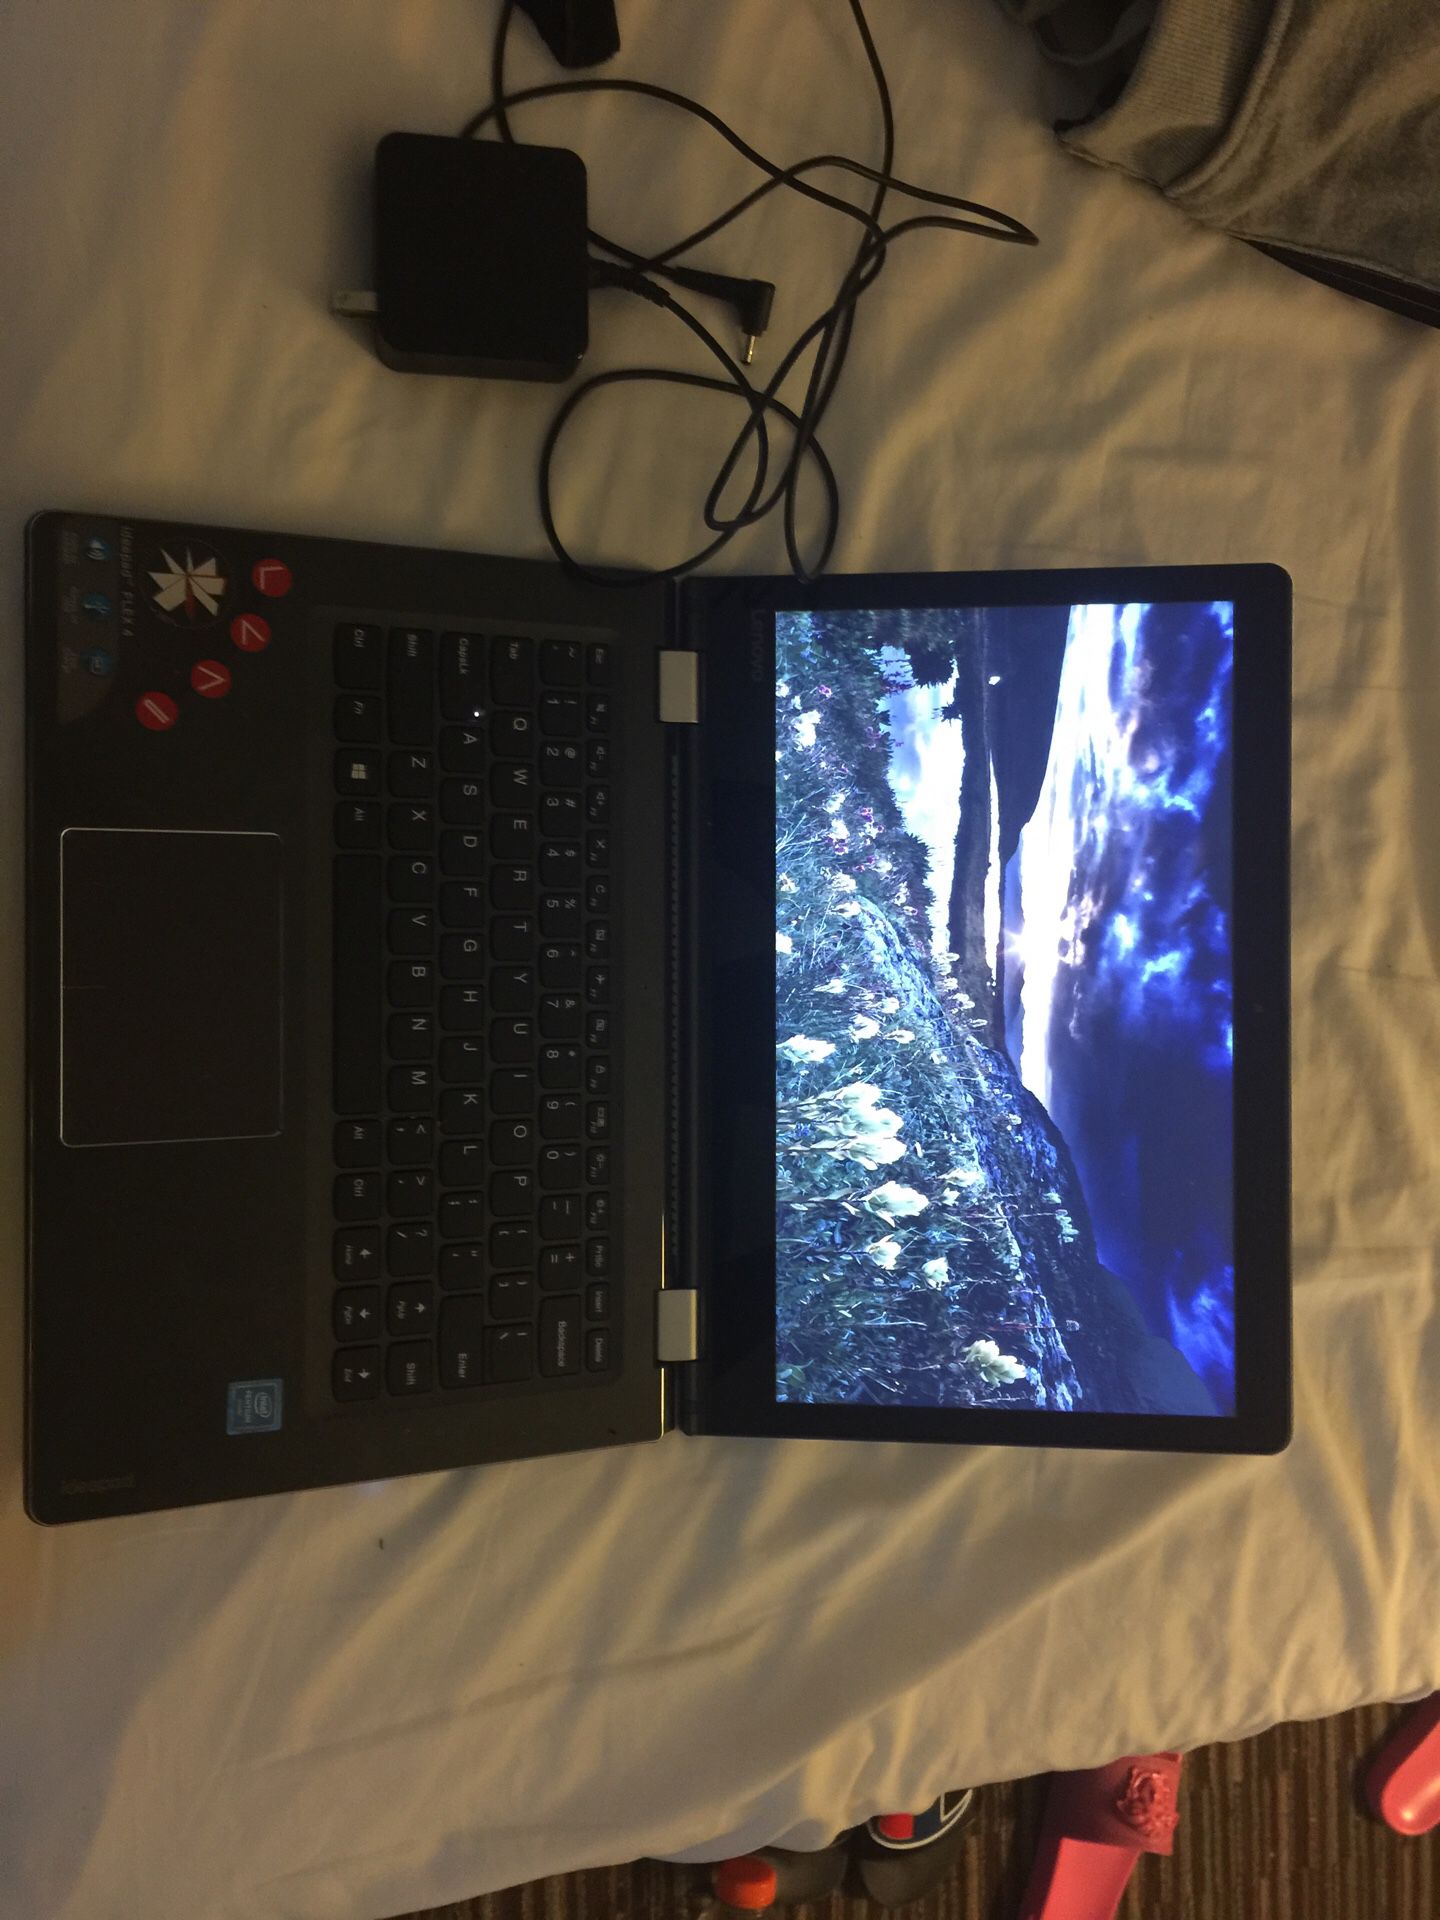 Lenovo touch screen 2020 laptop going for 550$